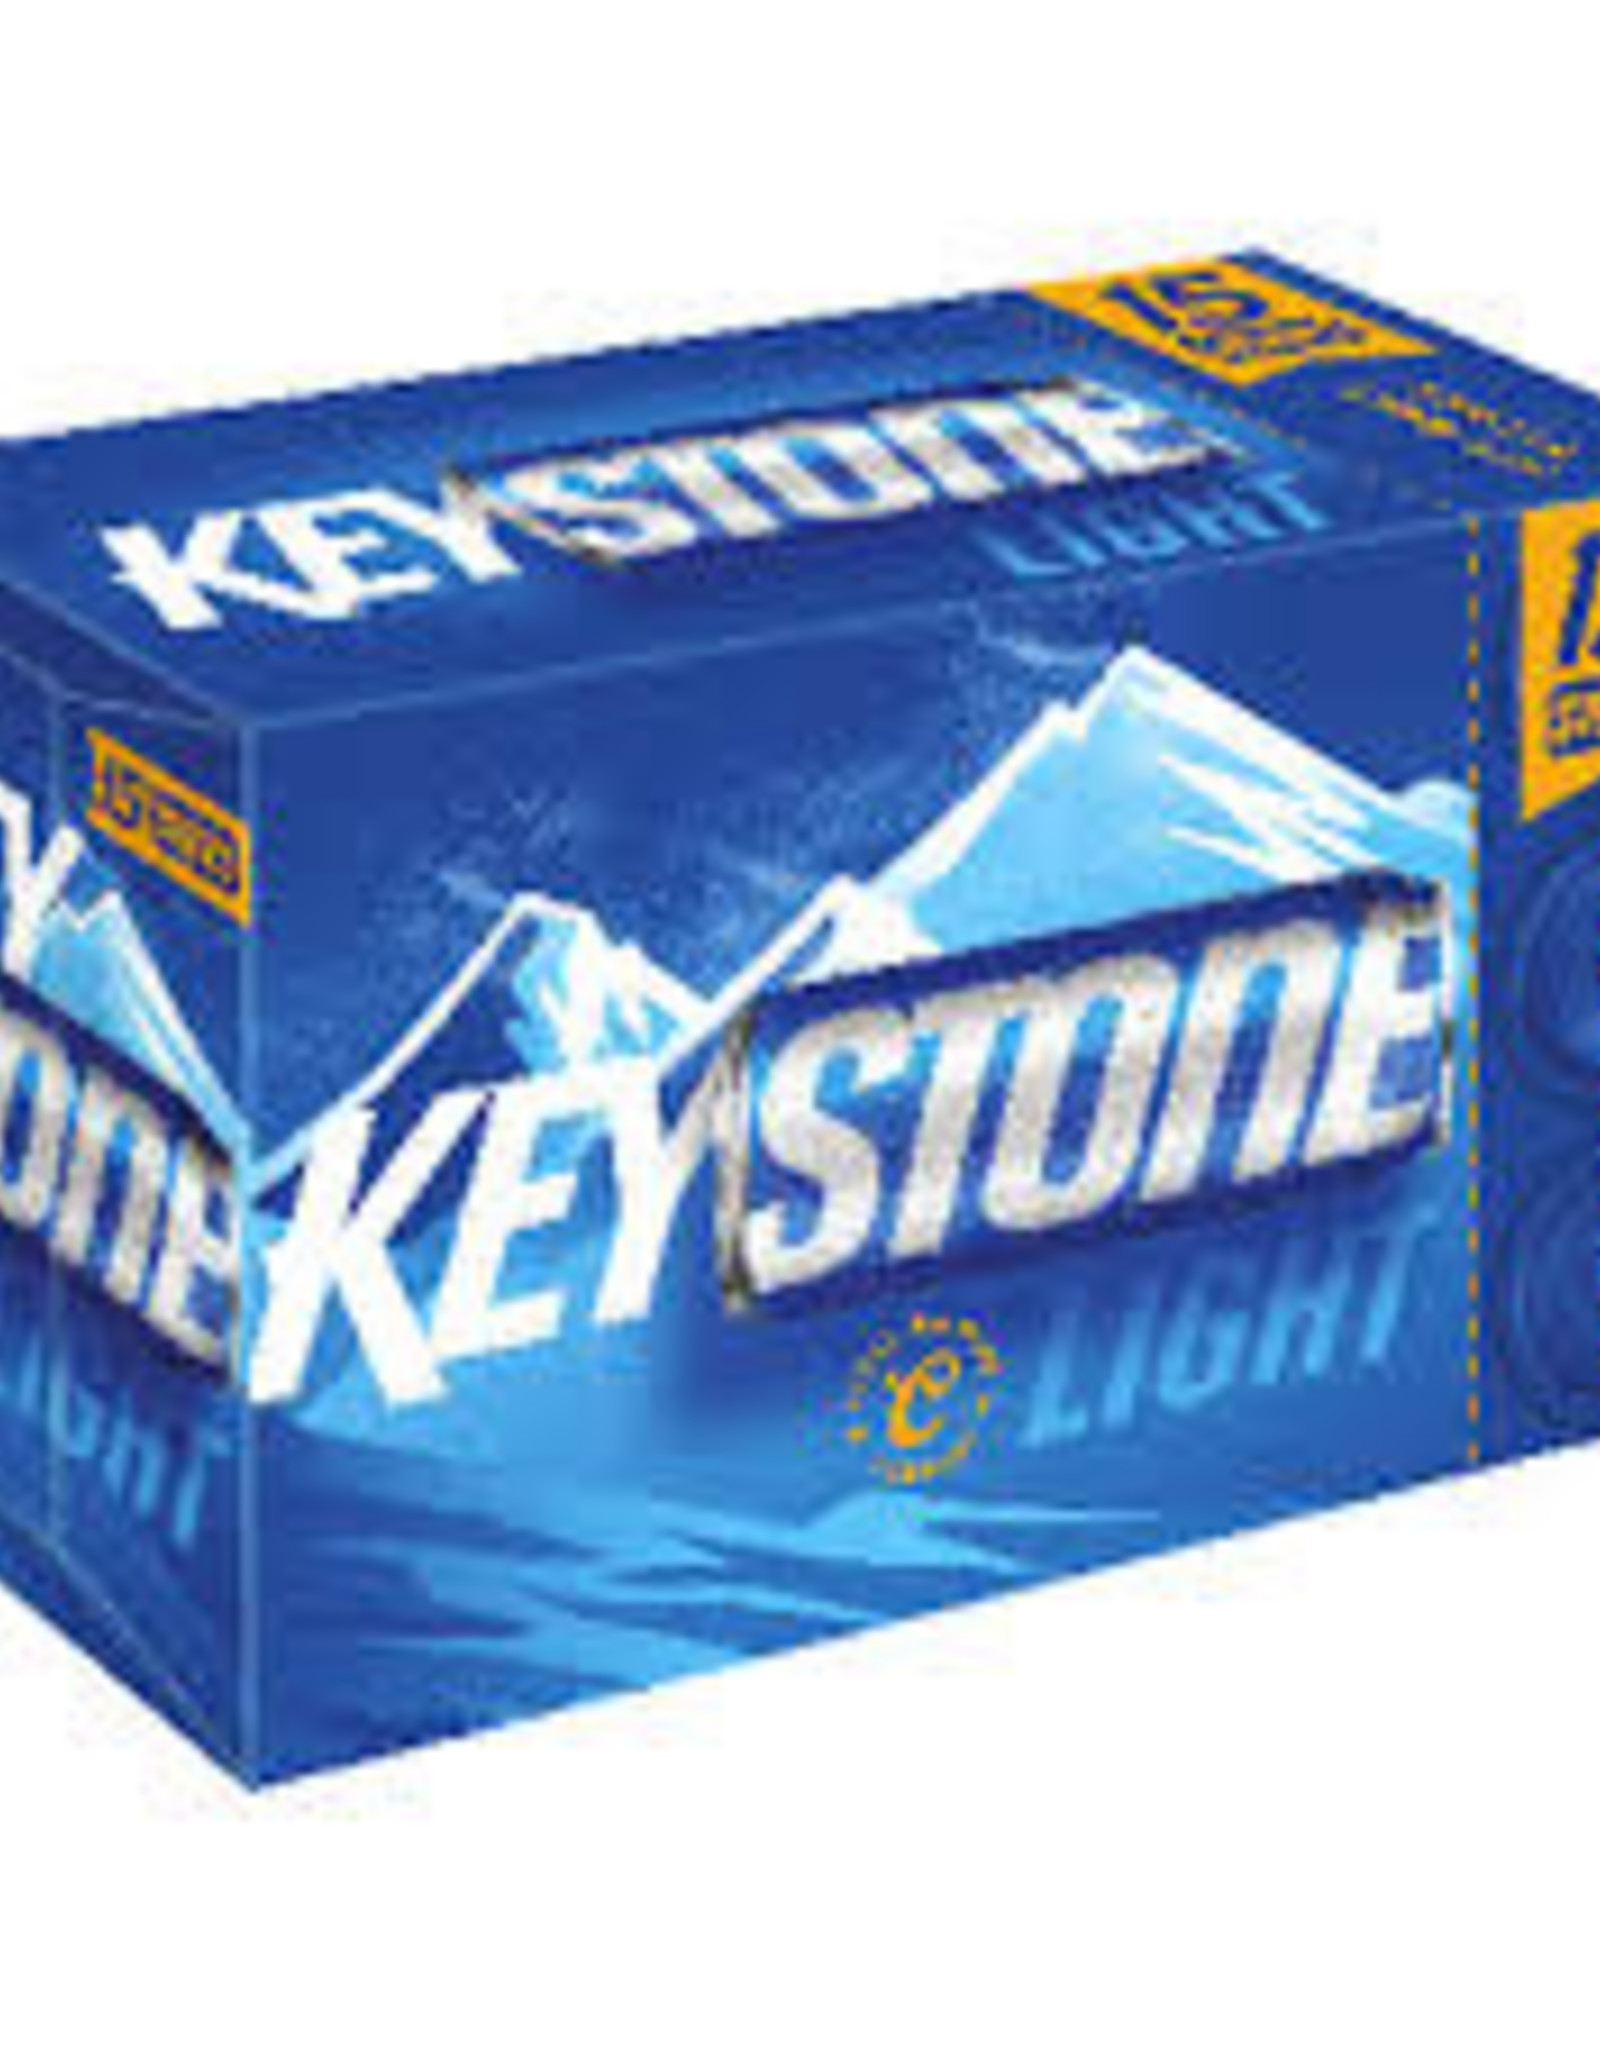 Keystone Keystone Light - 15pk - 12oz - Cans